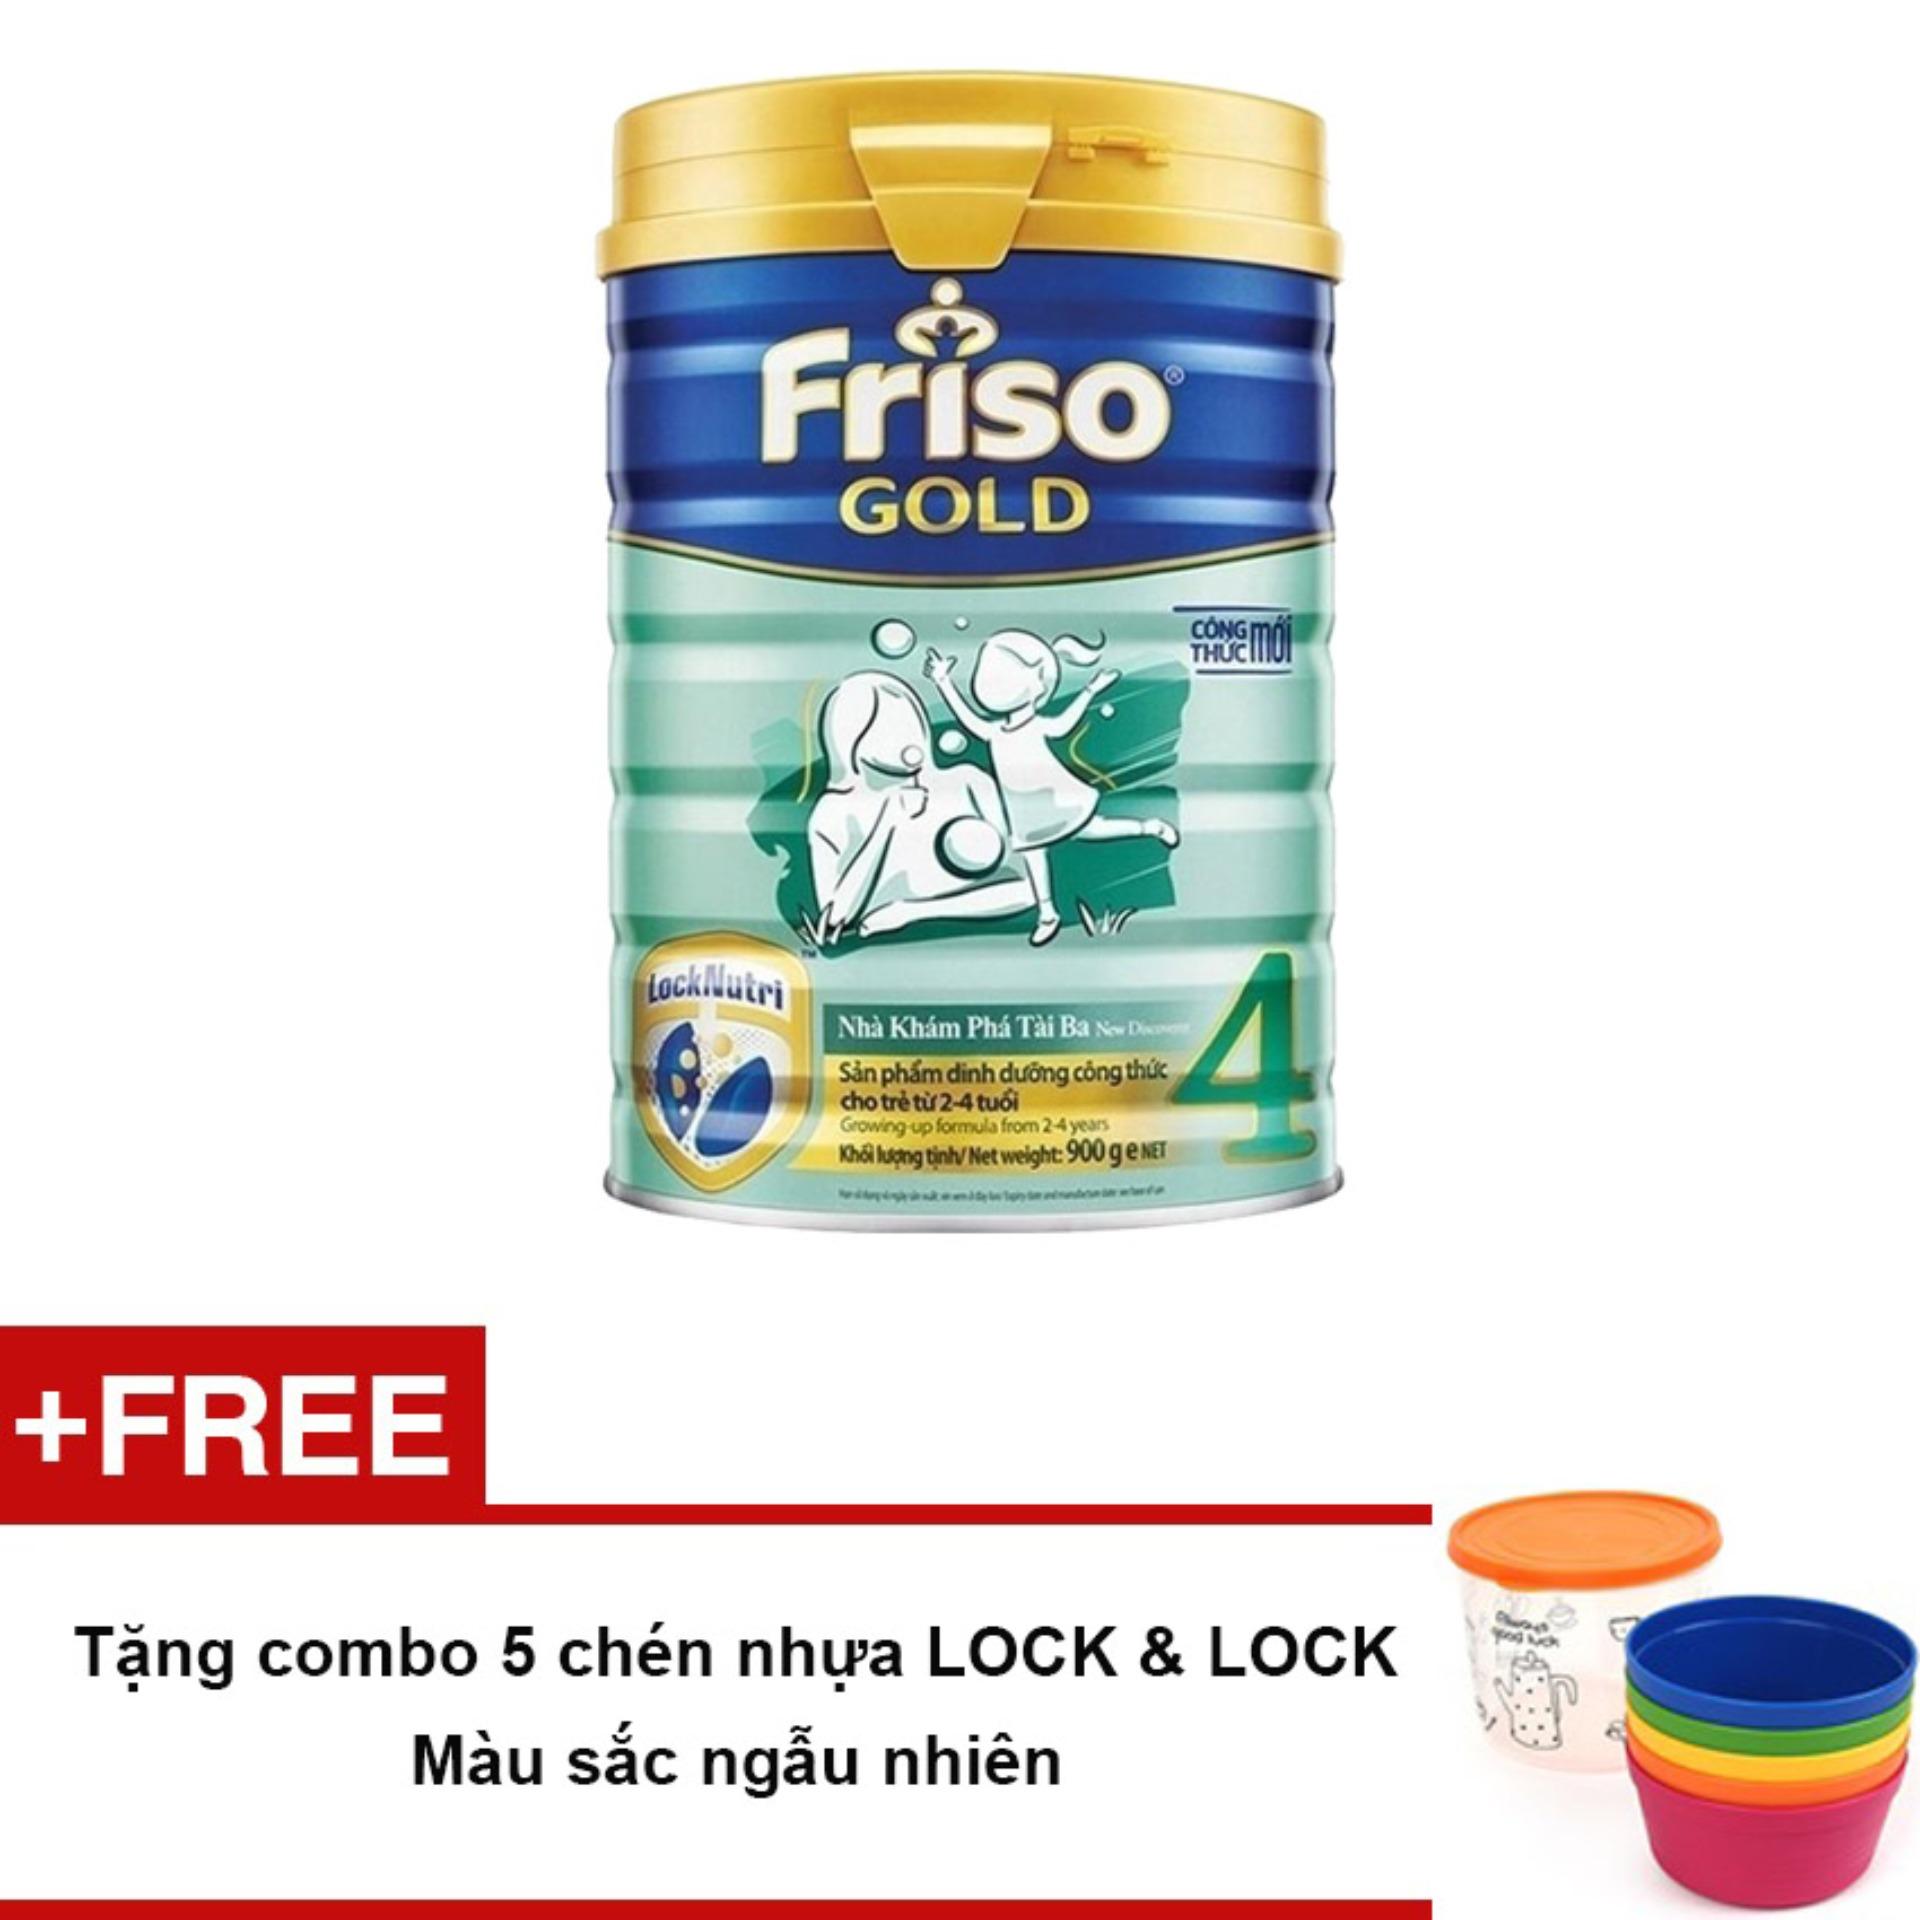 Sữa bột Friso Gold 4 900g + Tặng combo 5 chén nhựa LOCK & LOCK